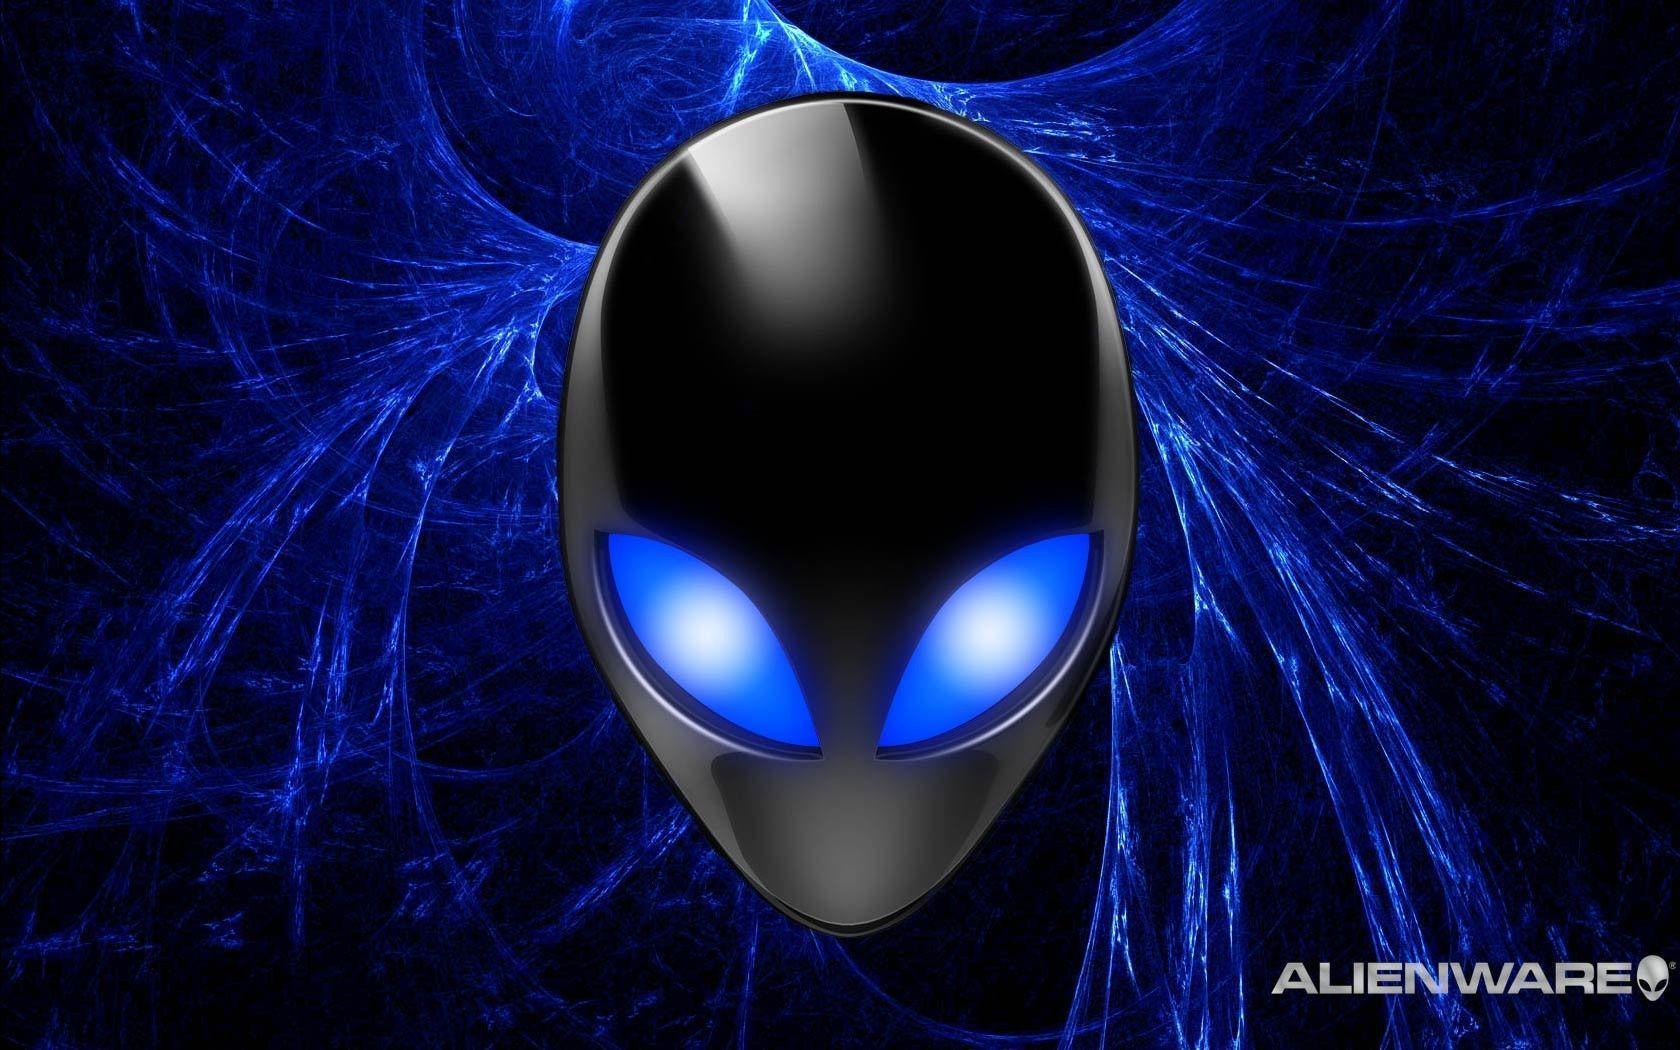 Download Alienware Wallpaper Wowwindows 1680x1050PX Wallpaper